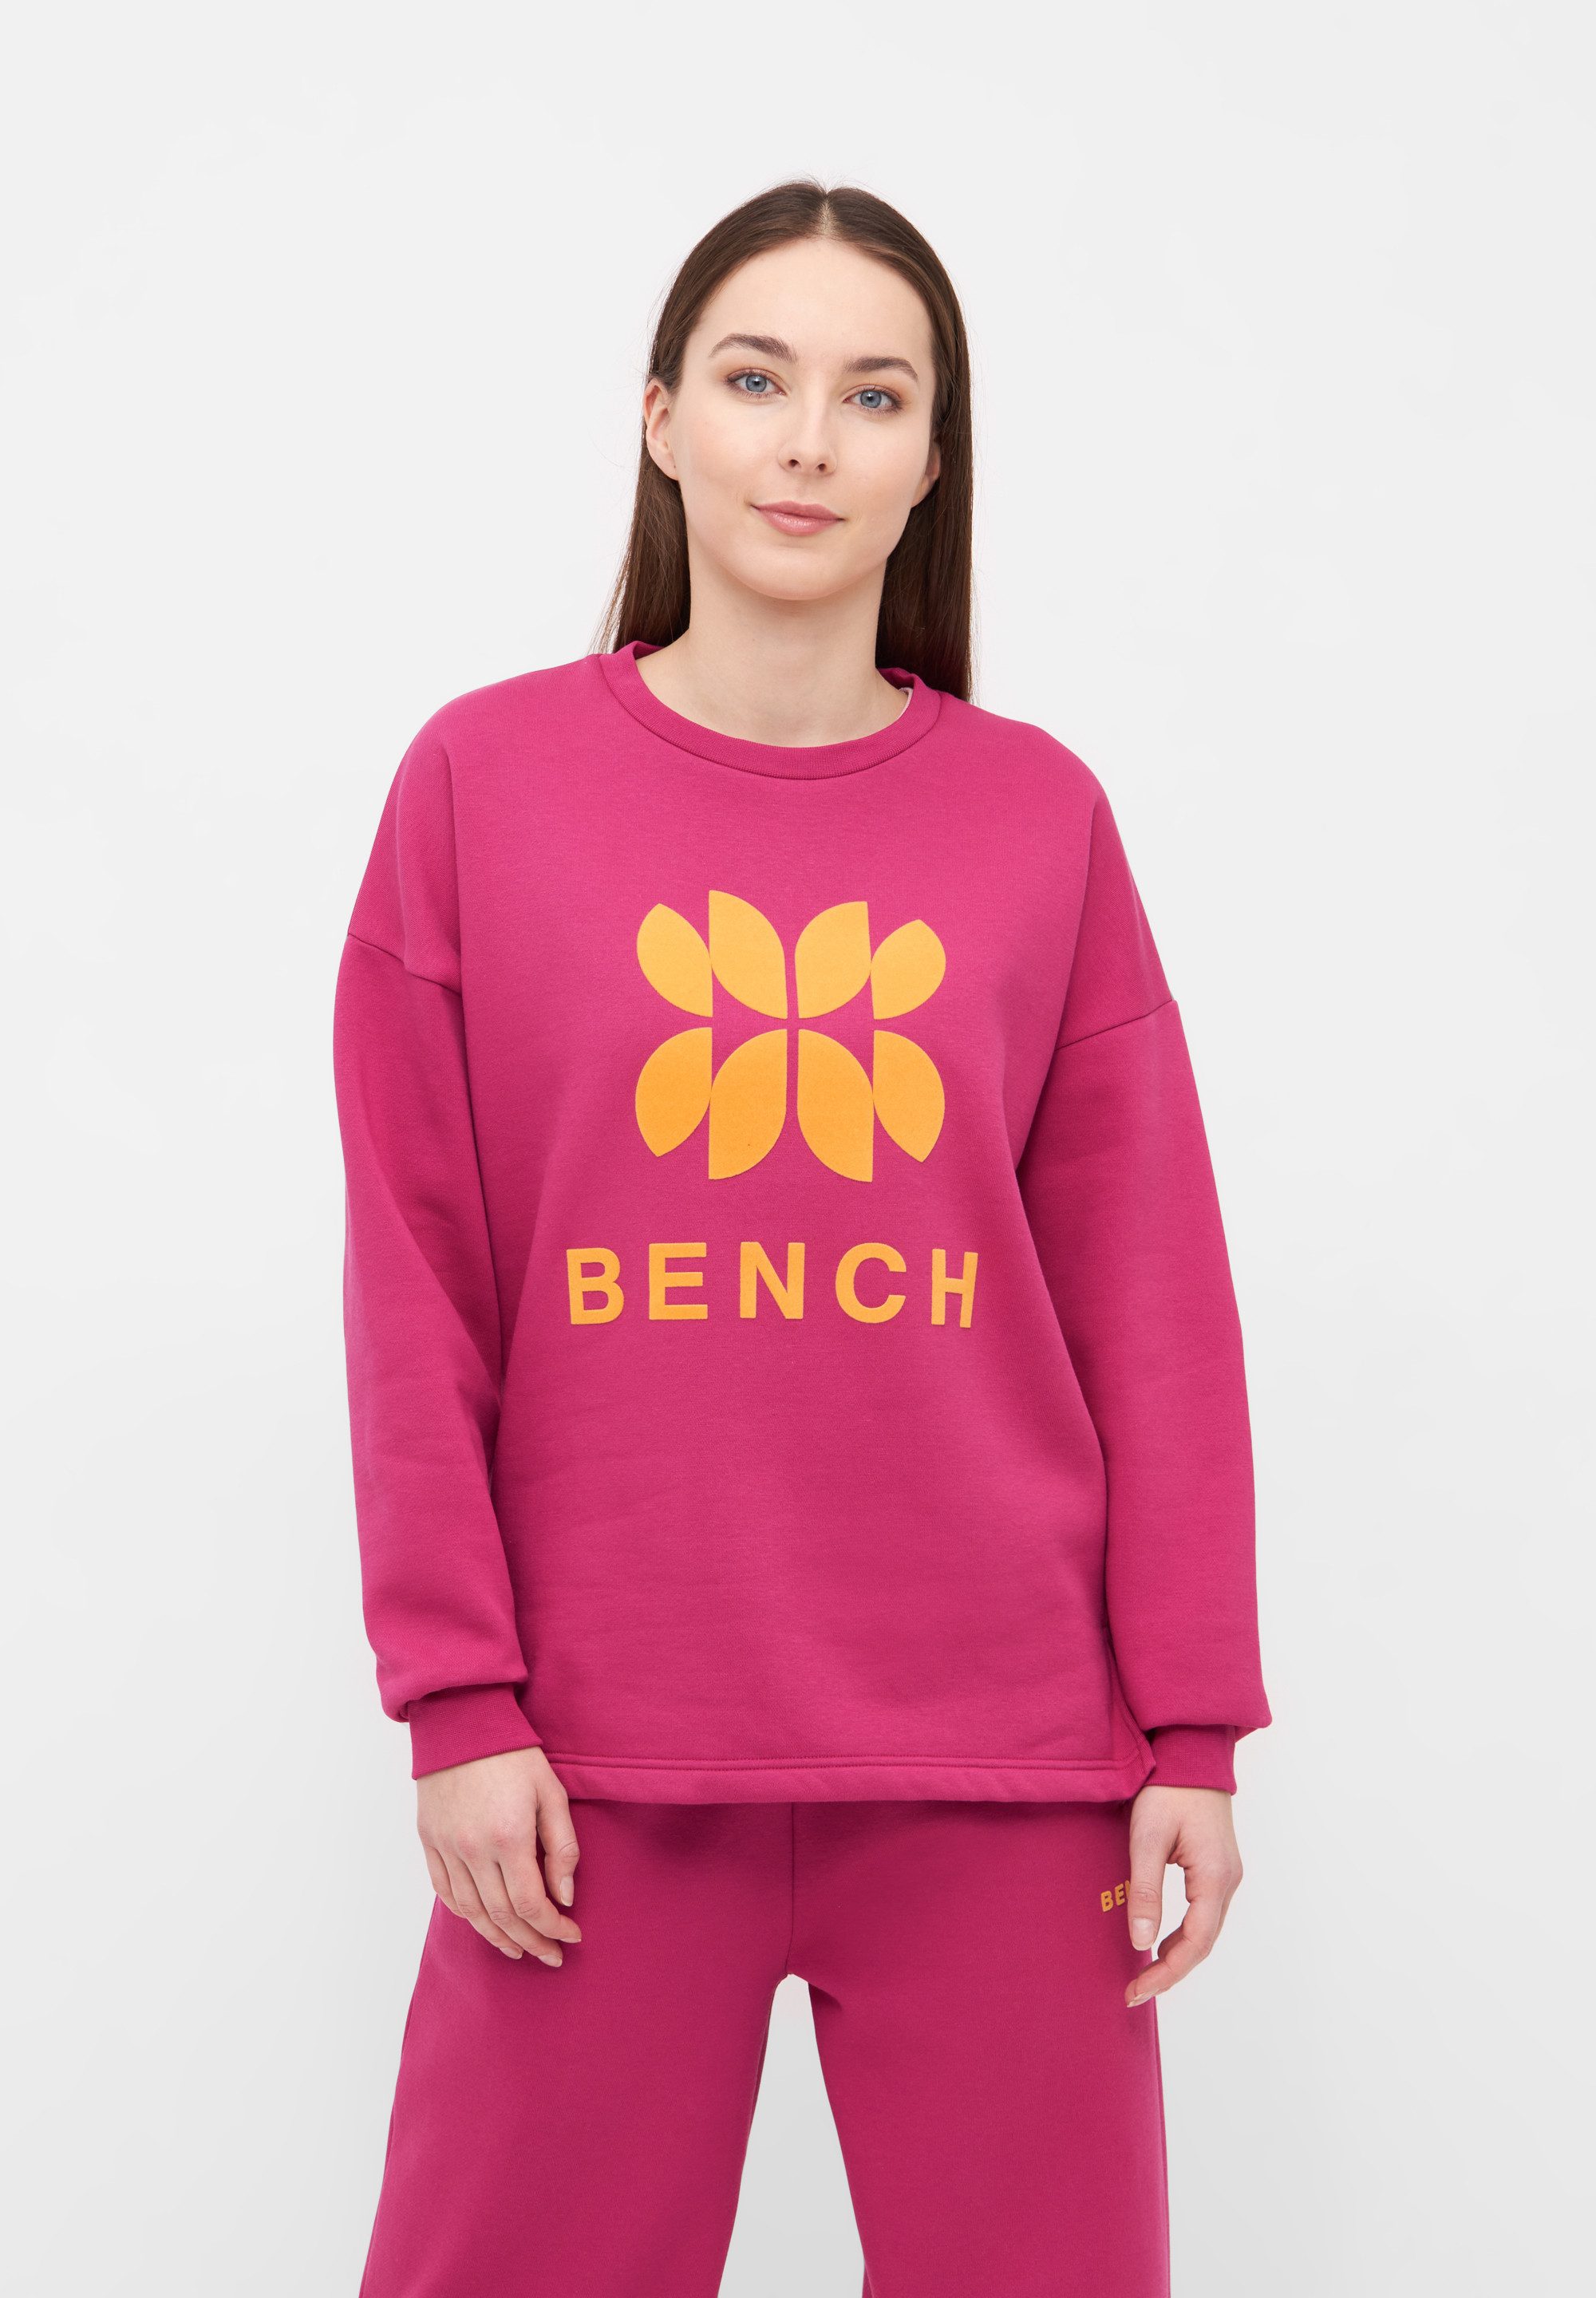 Bench. Sweatshirt